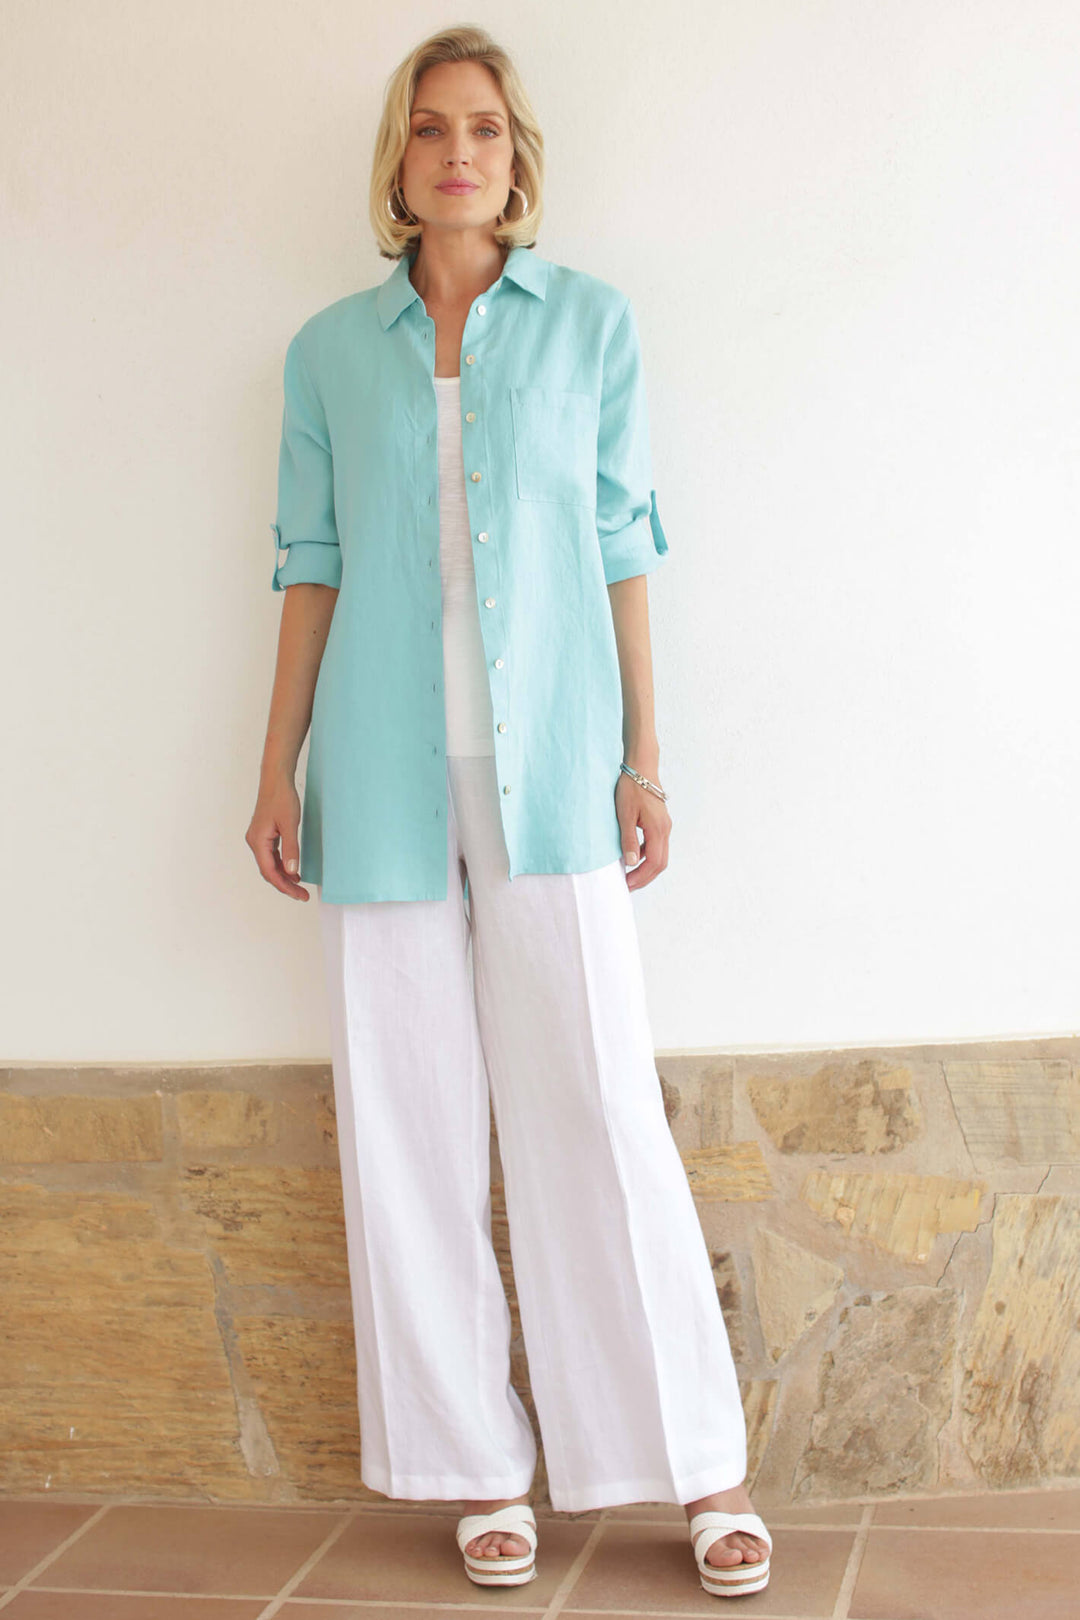 Pomodoro 42303 Turquoise Linen Shirt